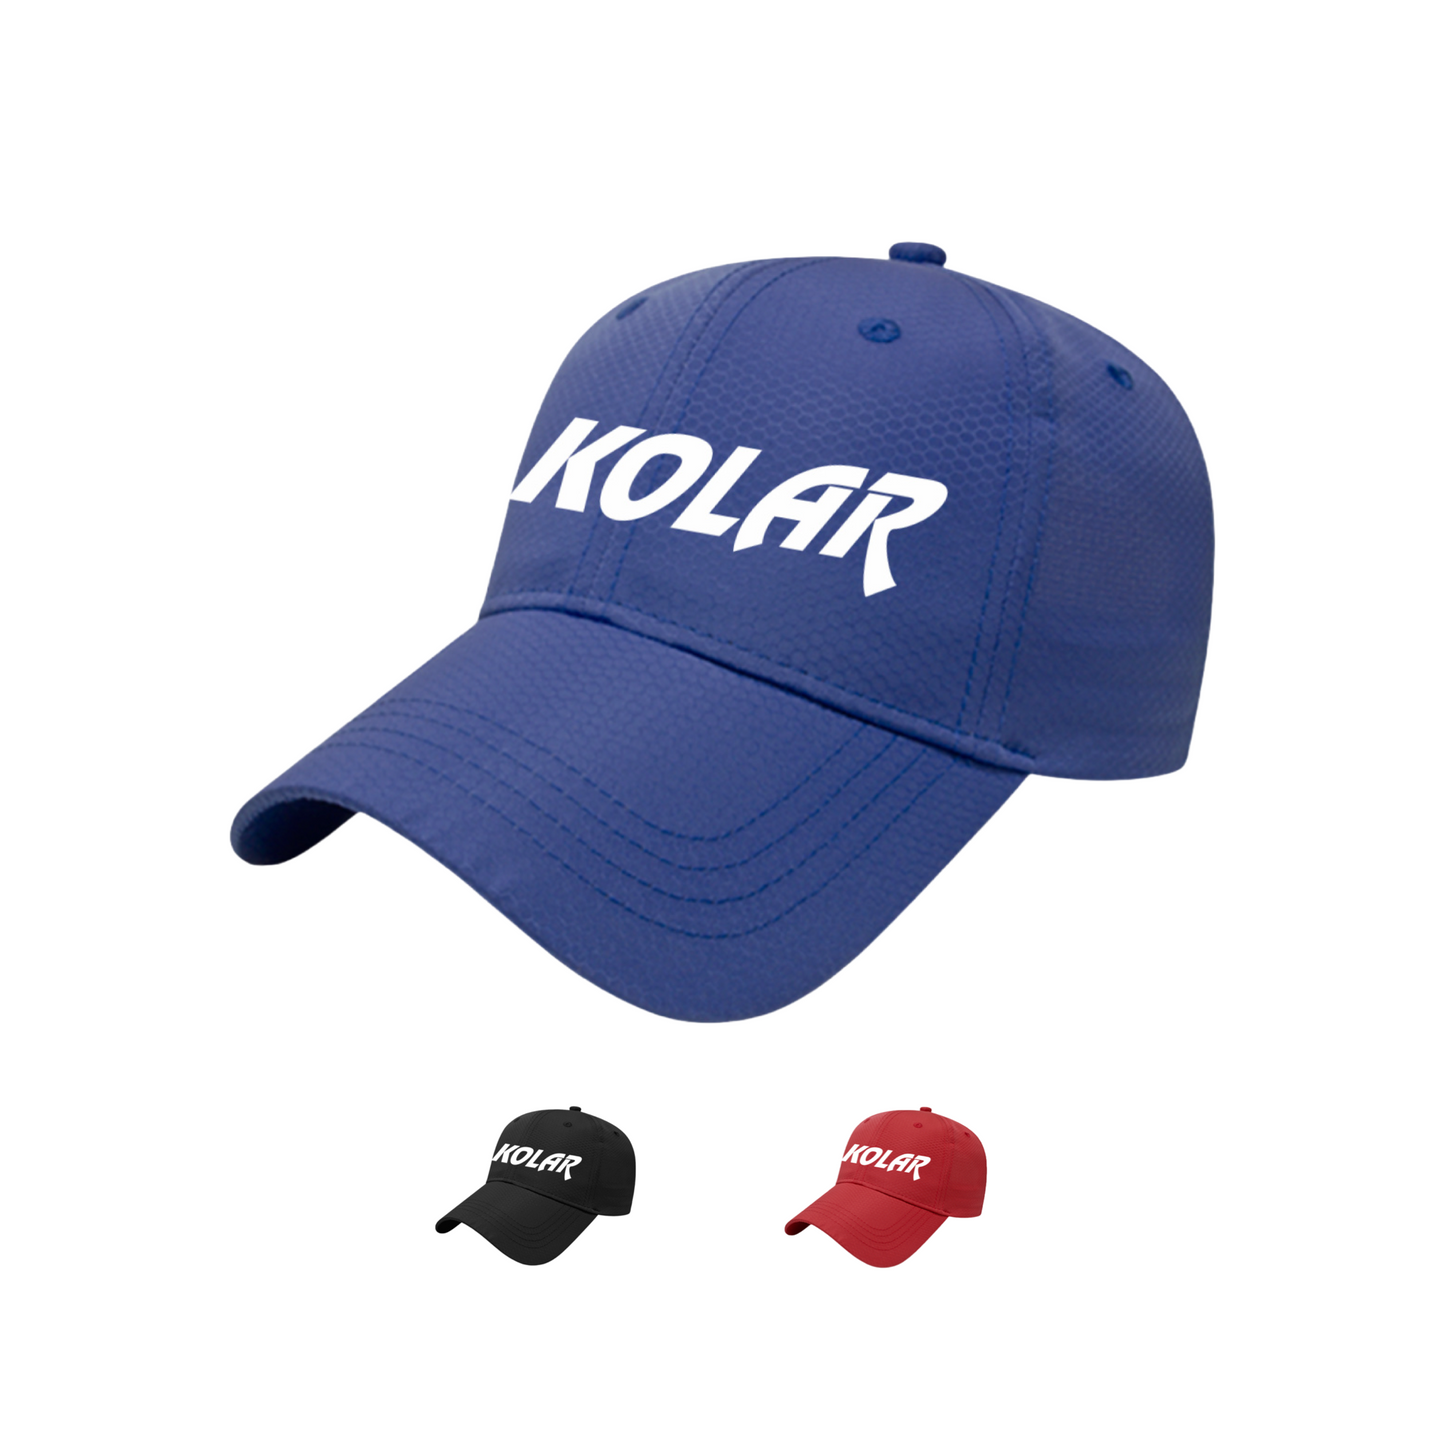 Kolar Lightweight Performance Cap (3 colors)